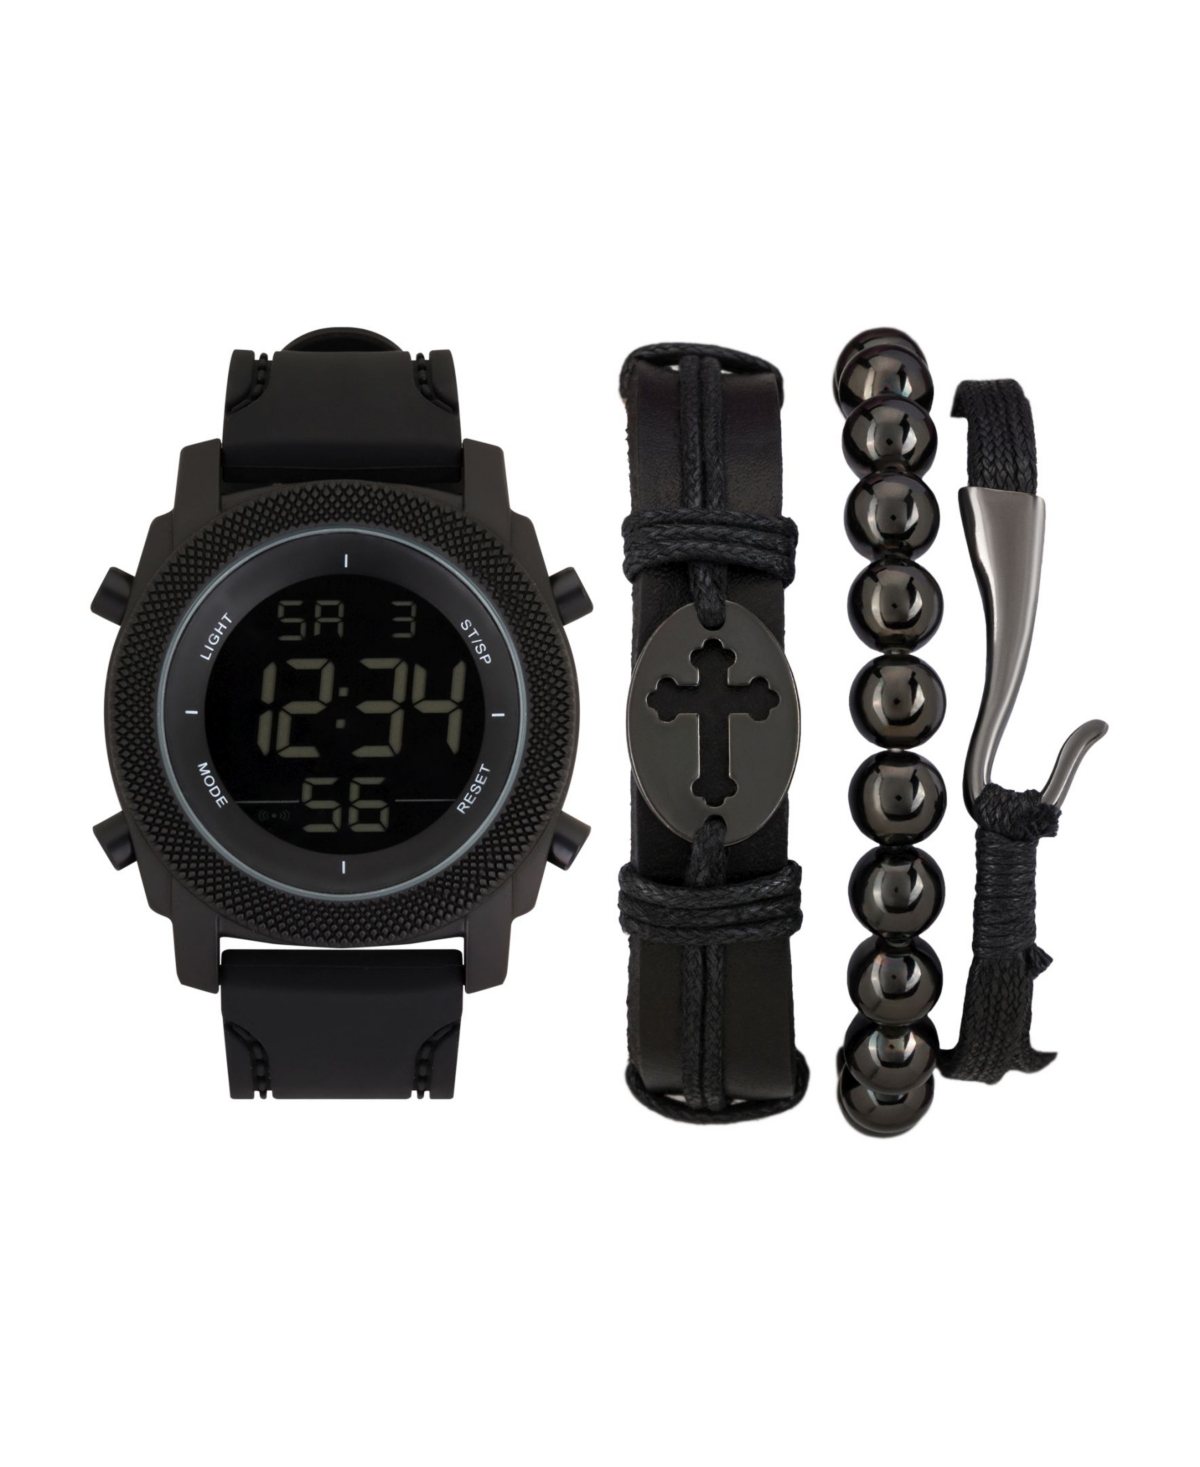 American Exchange Men's Quartz Digital Dial Black Silicone Strap Watch and Assorted Black Stackable Bracelets Gift Set, Set of 4